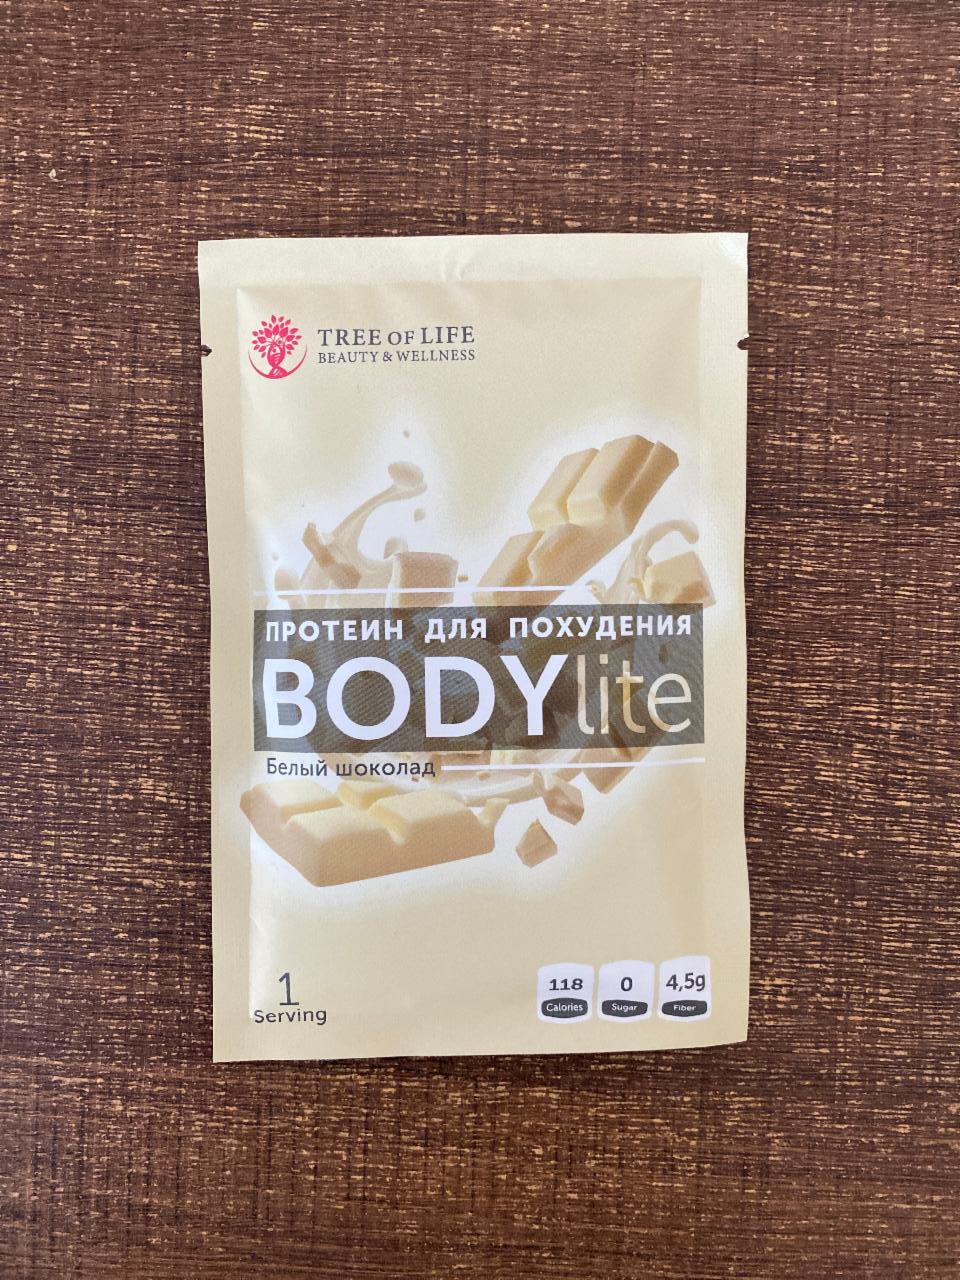 Фото - белый шоколад протеин для похудения Body lite TREE OF LIFE